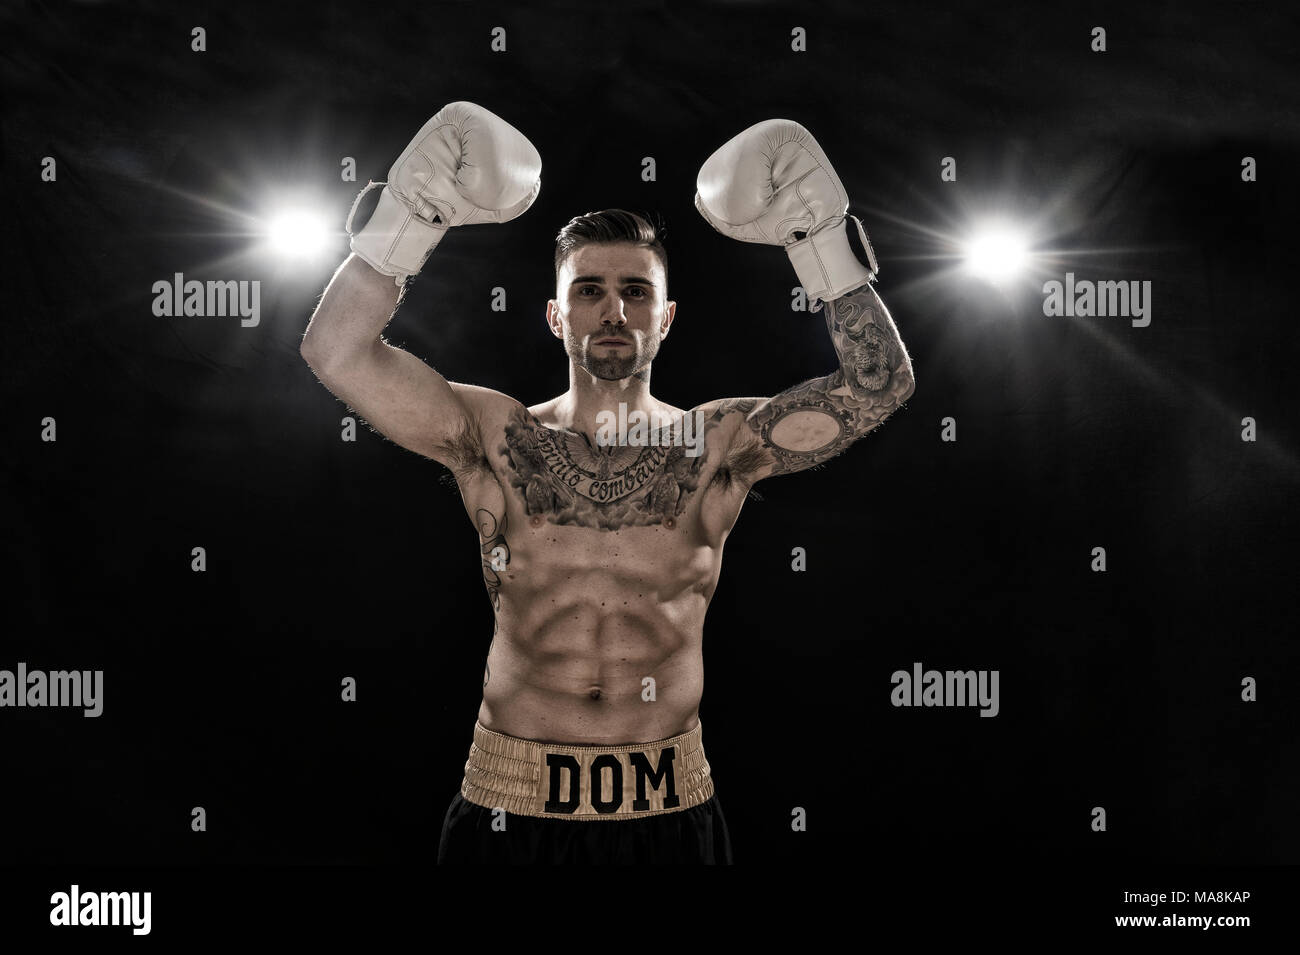 Male fitness boxers Stock Photo - Alamy